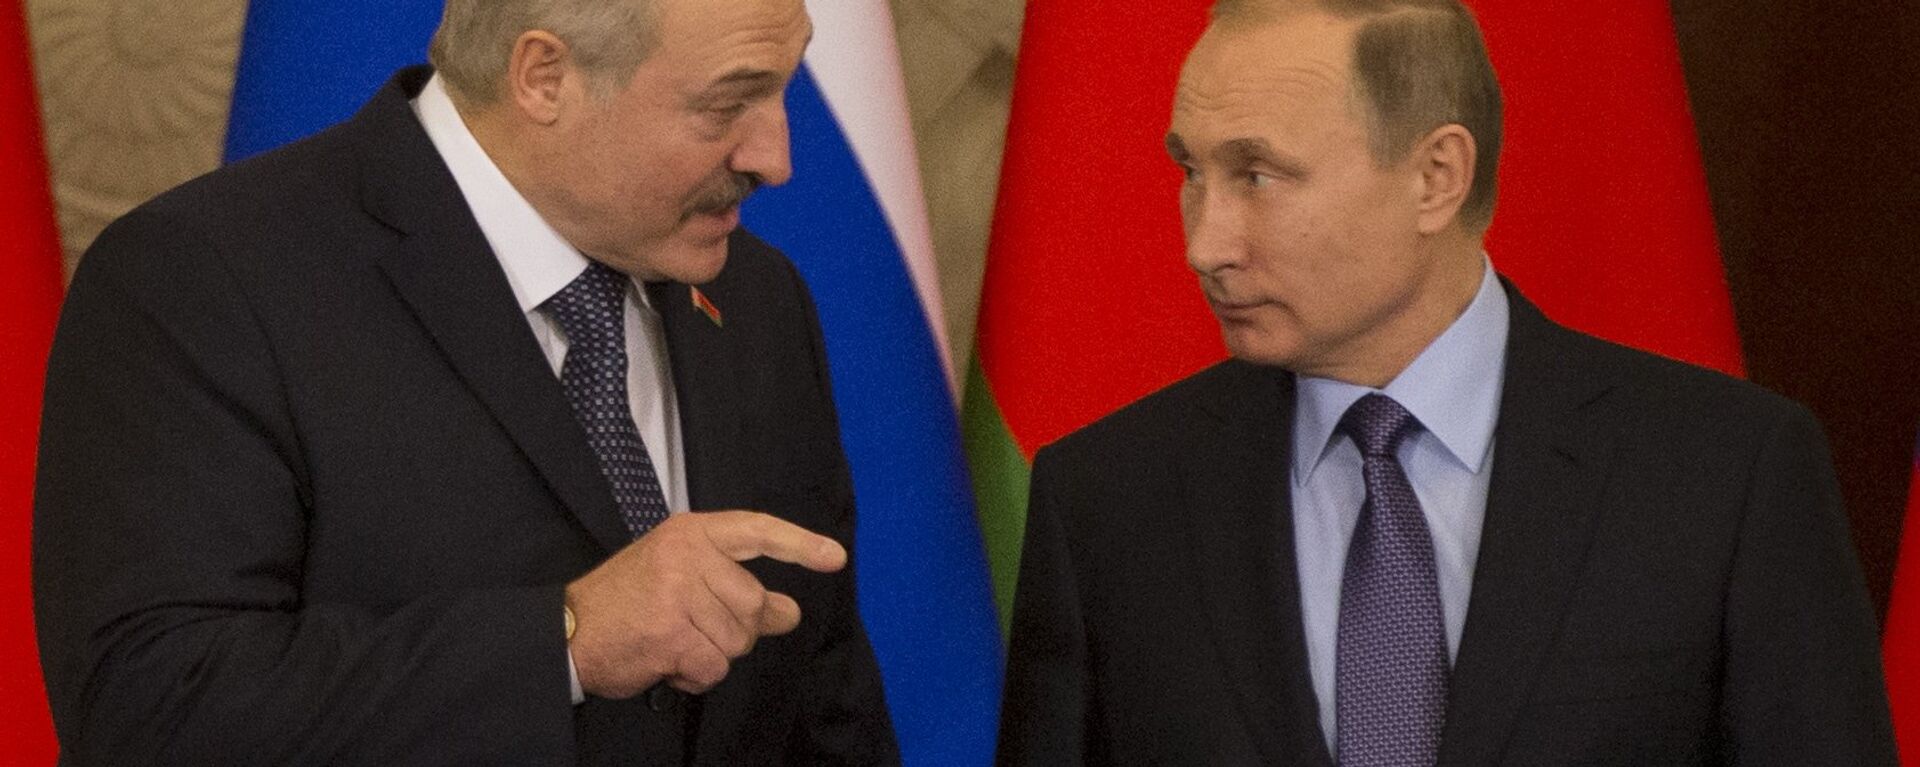 Predsednik Belorusije Aleksandar Lukašenko i predsednik Rusije Vladimir Putin - Sputnik Srbija, 1920, 13.07.2021